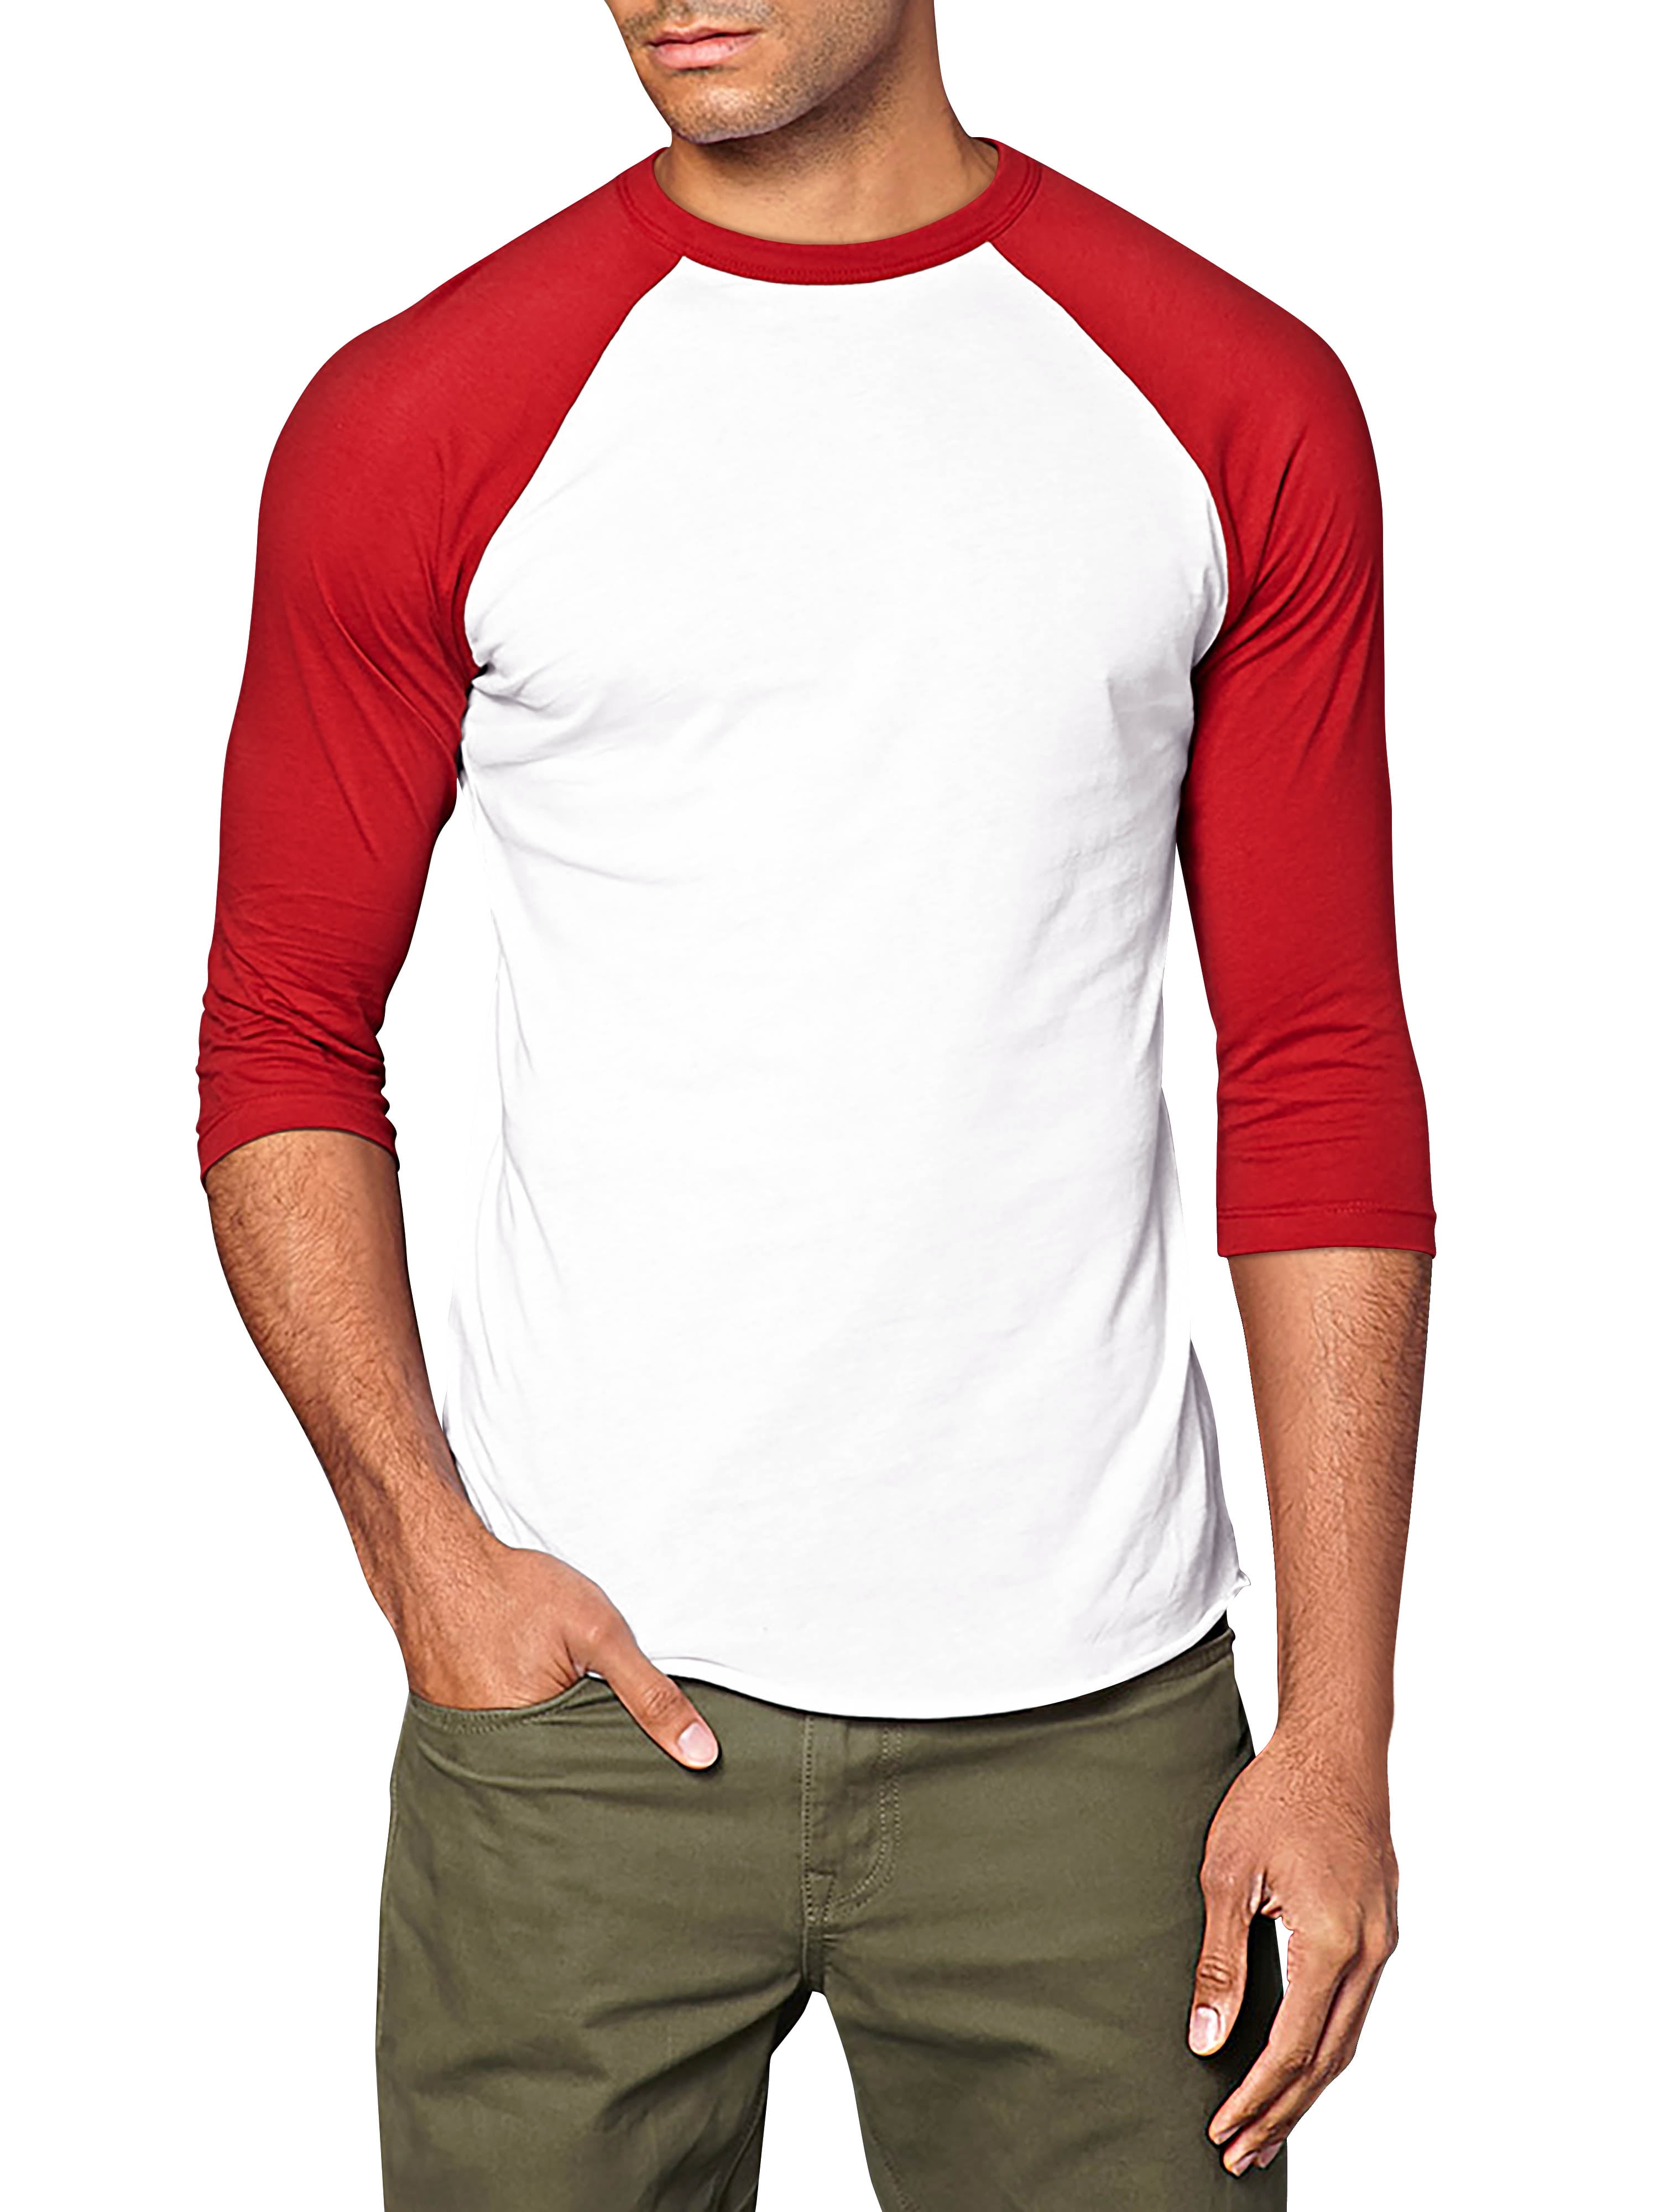 Mens Sleeve Raglan Baseball T Shirt - Walmart.com